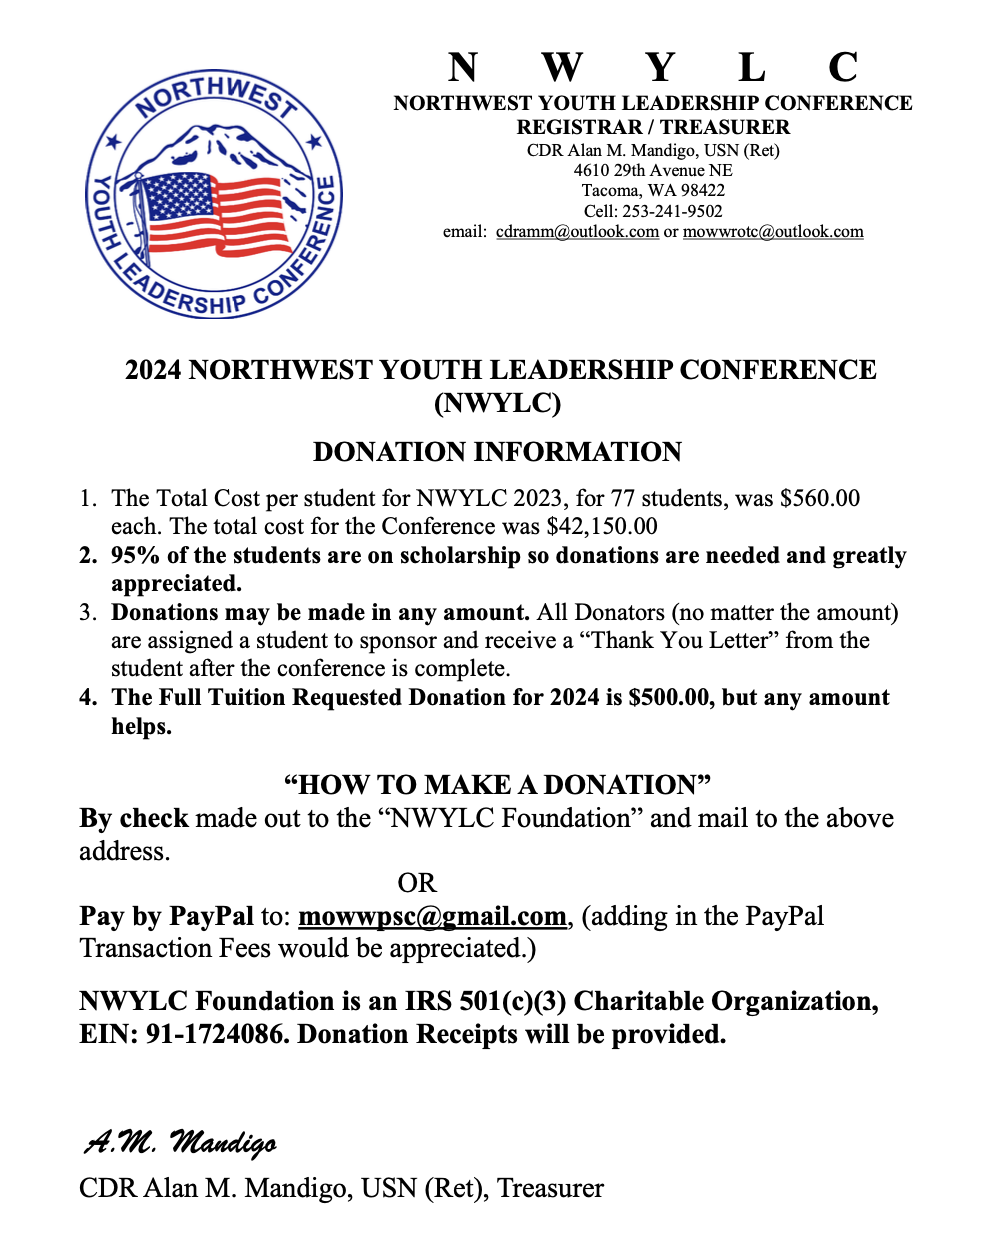 2024 - NWYLC DONATION INFORMATION PG